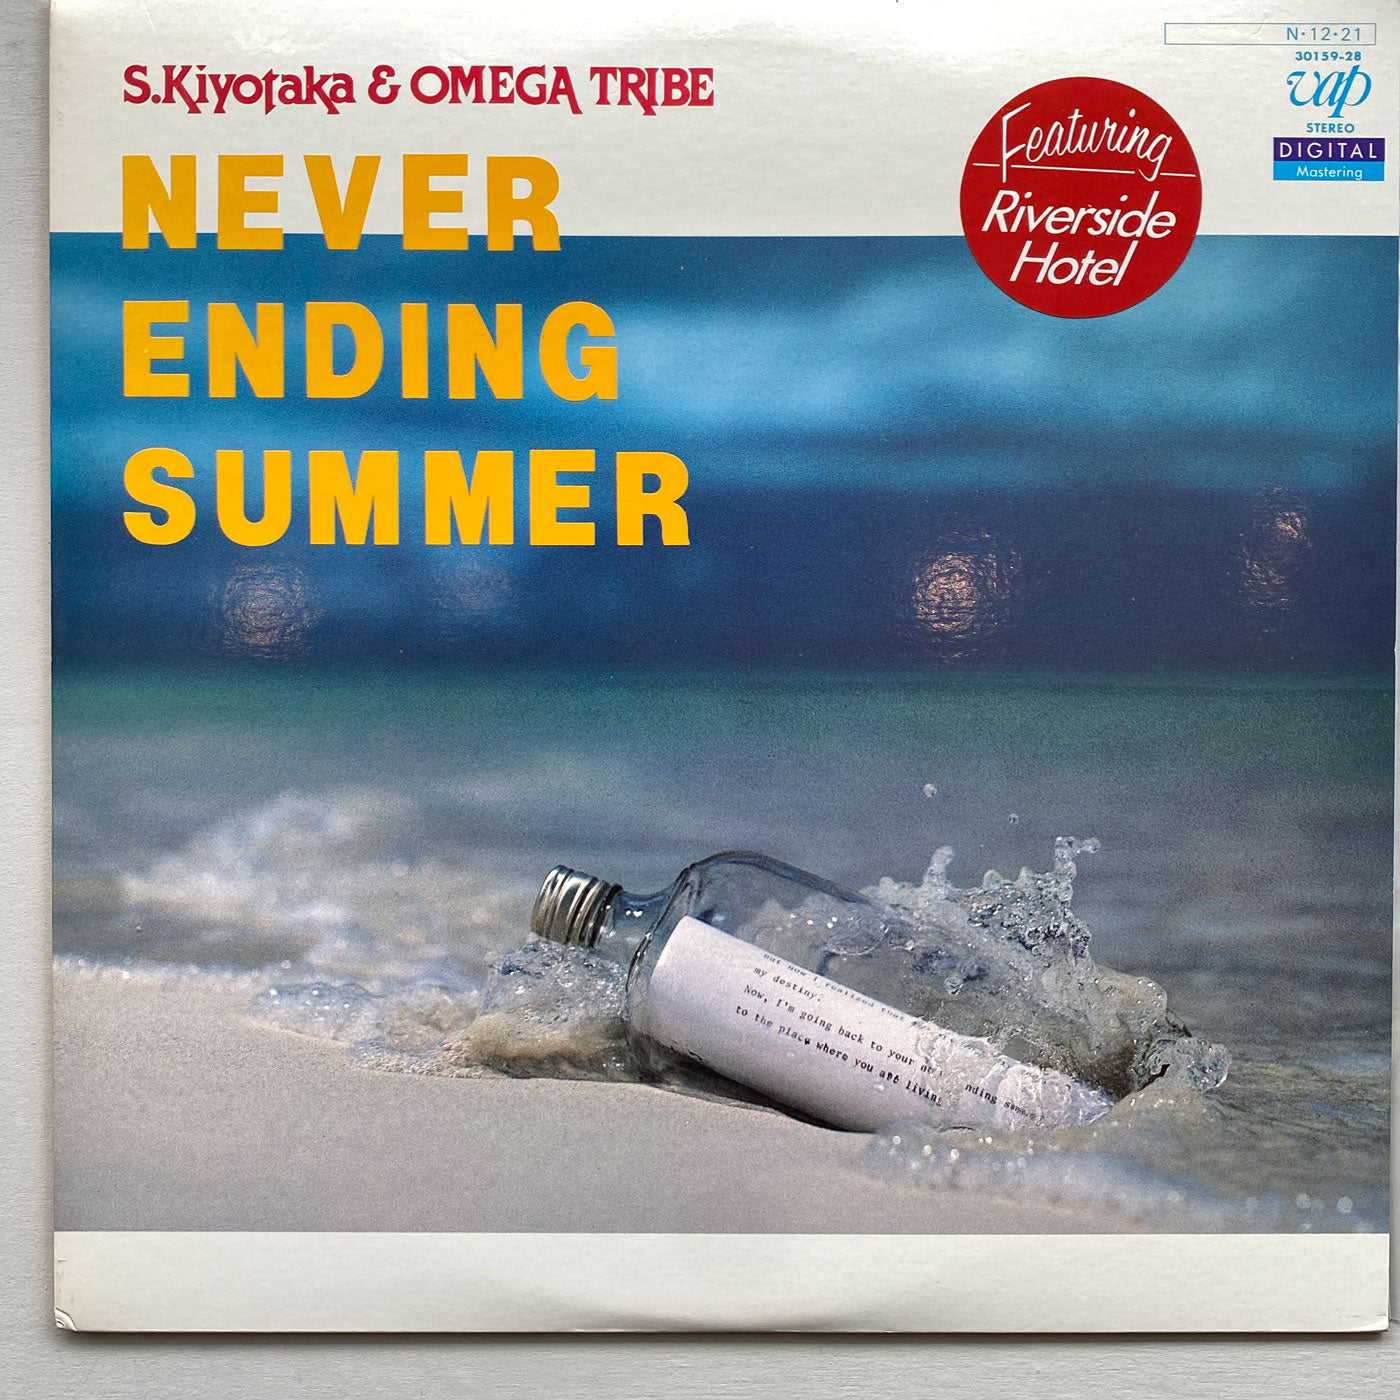 Kiyotaka Sugiyama & Omega Trive - Never Ending Summer